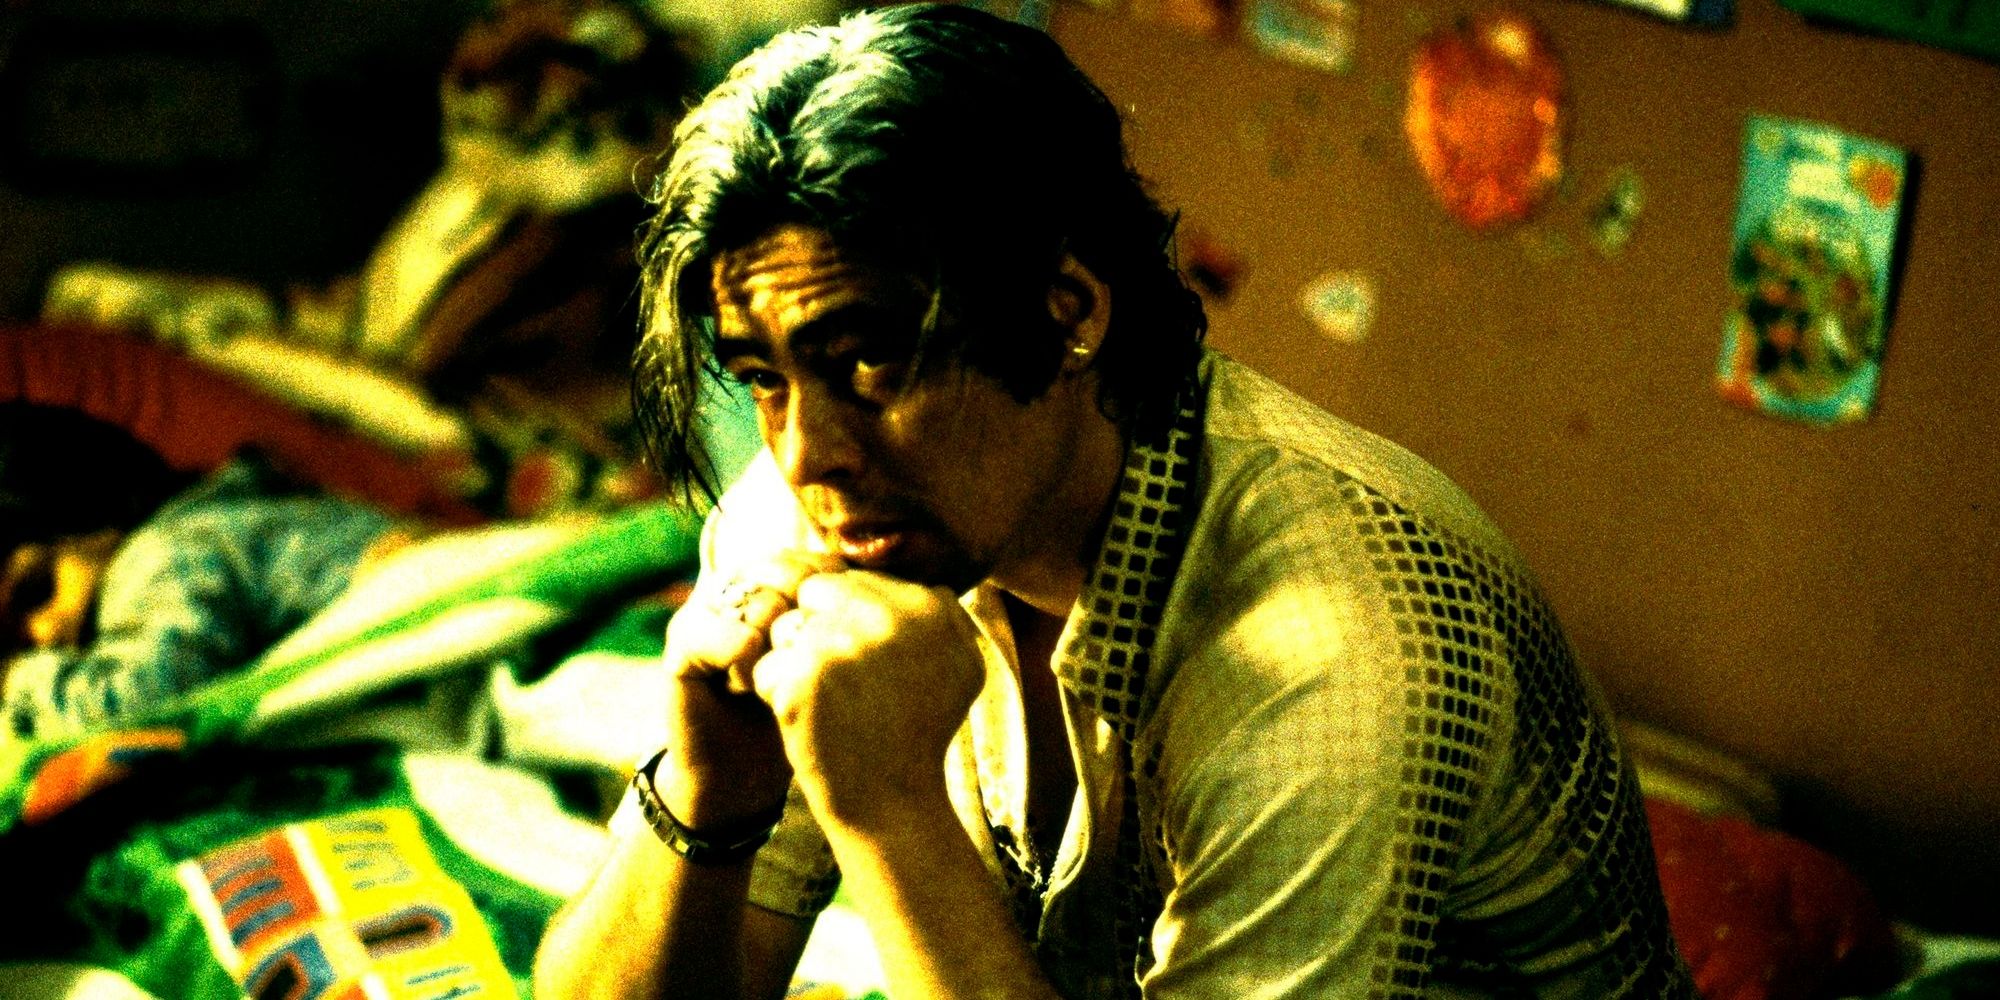 Benicio Del Toro as Jack Jordan looking pensive in 21Grams